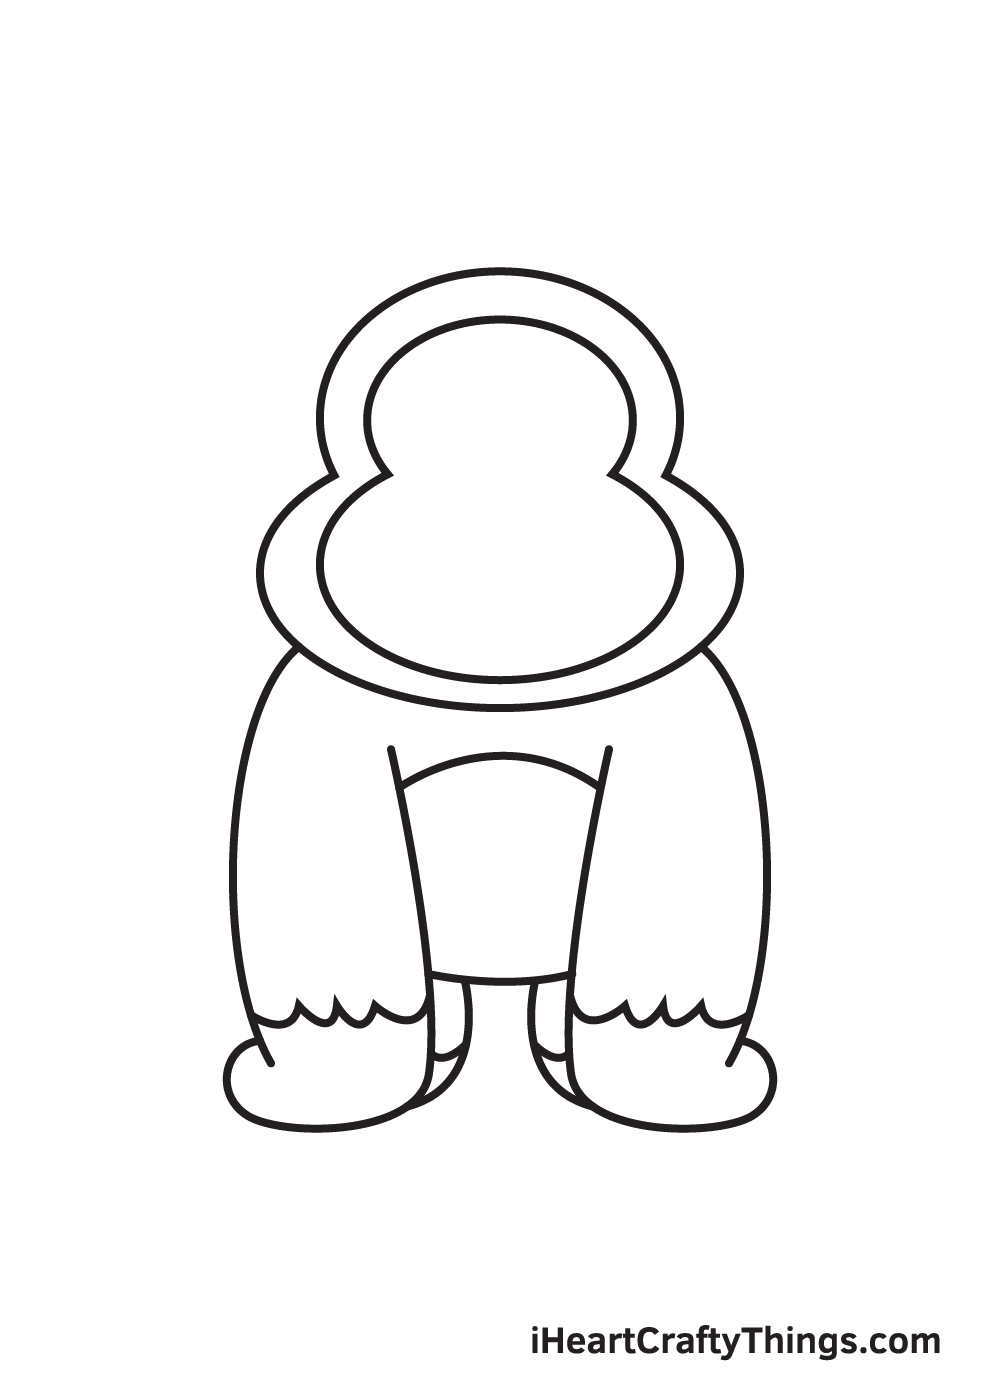 gorilla drawing - step 7